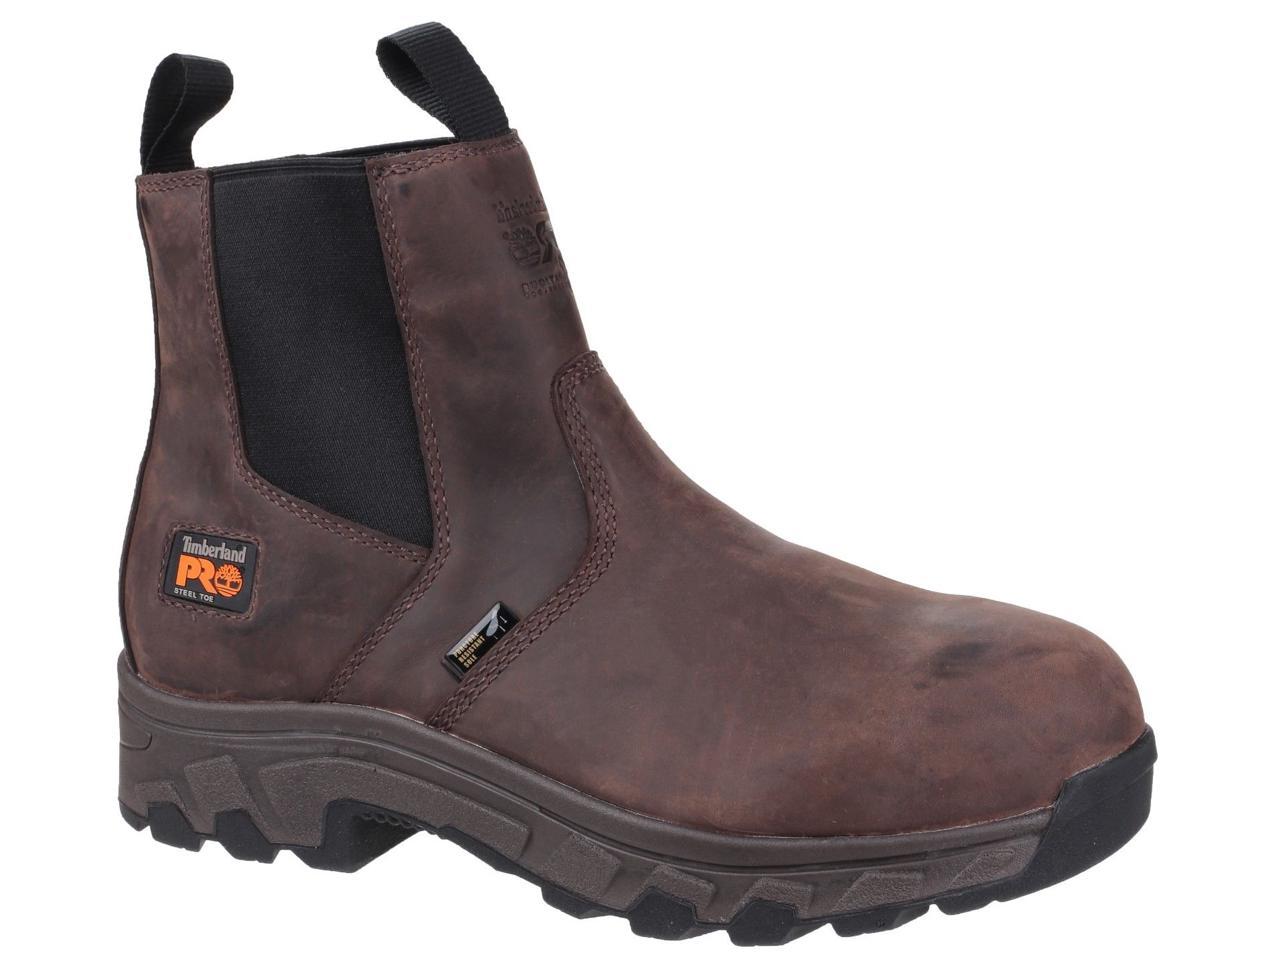 timberland steel toe work boots